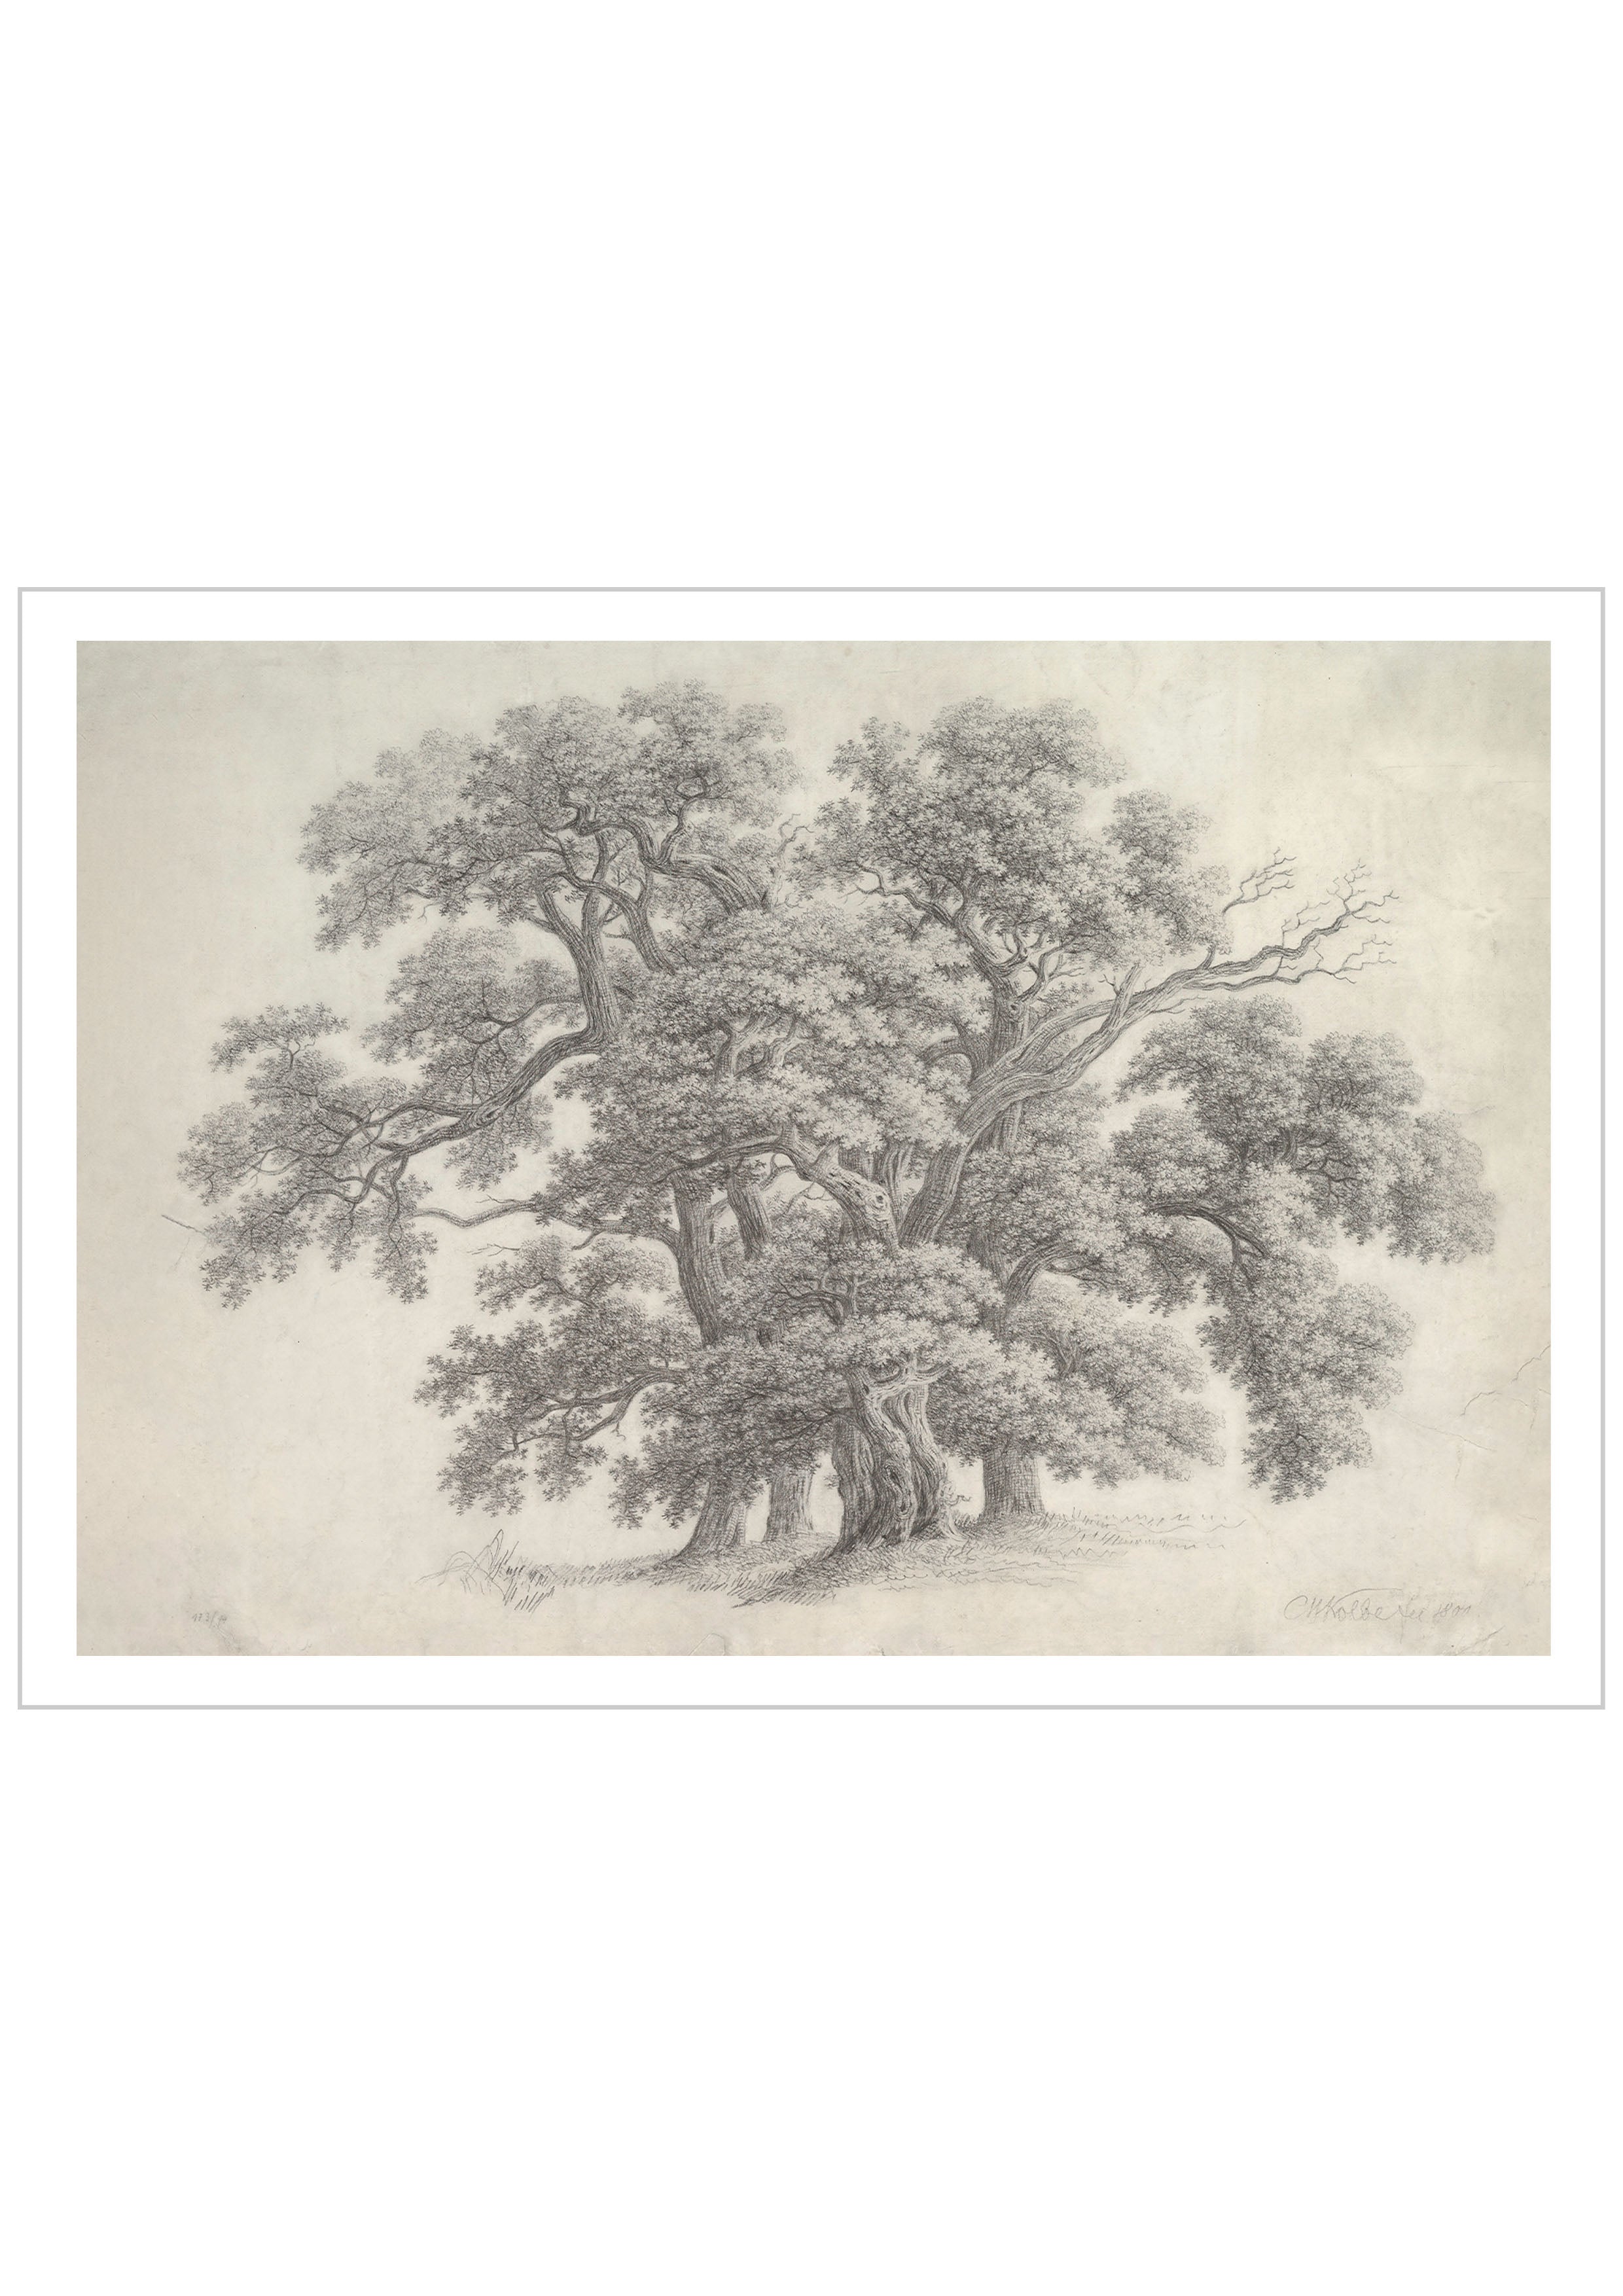 Study of Oak Trees was created by the German artist Carl Wilhelm Kolbe